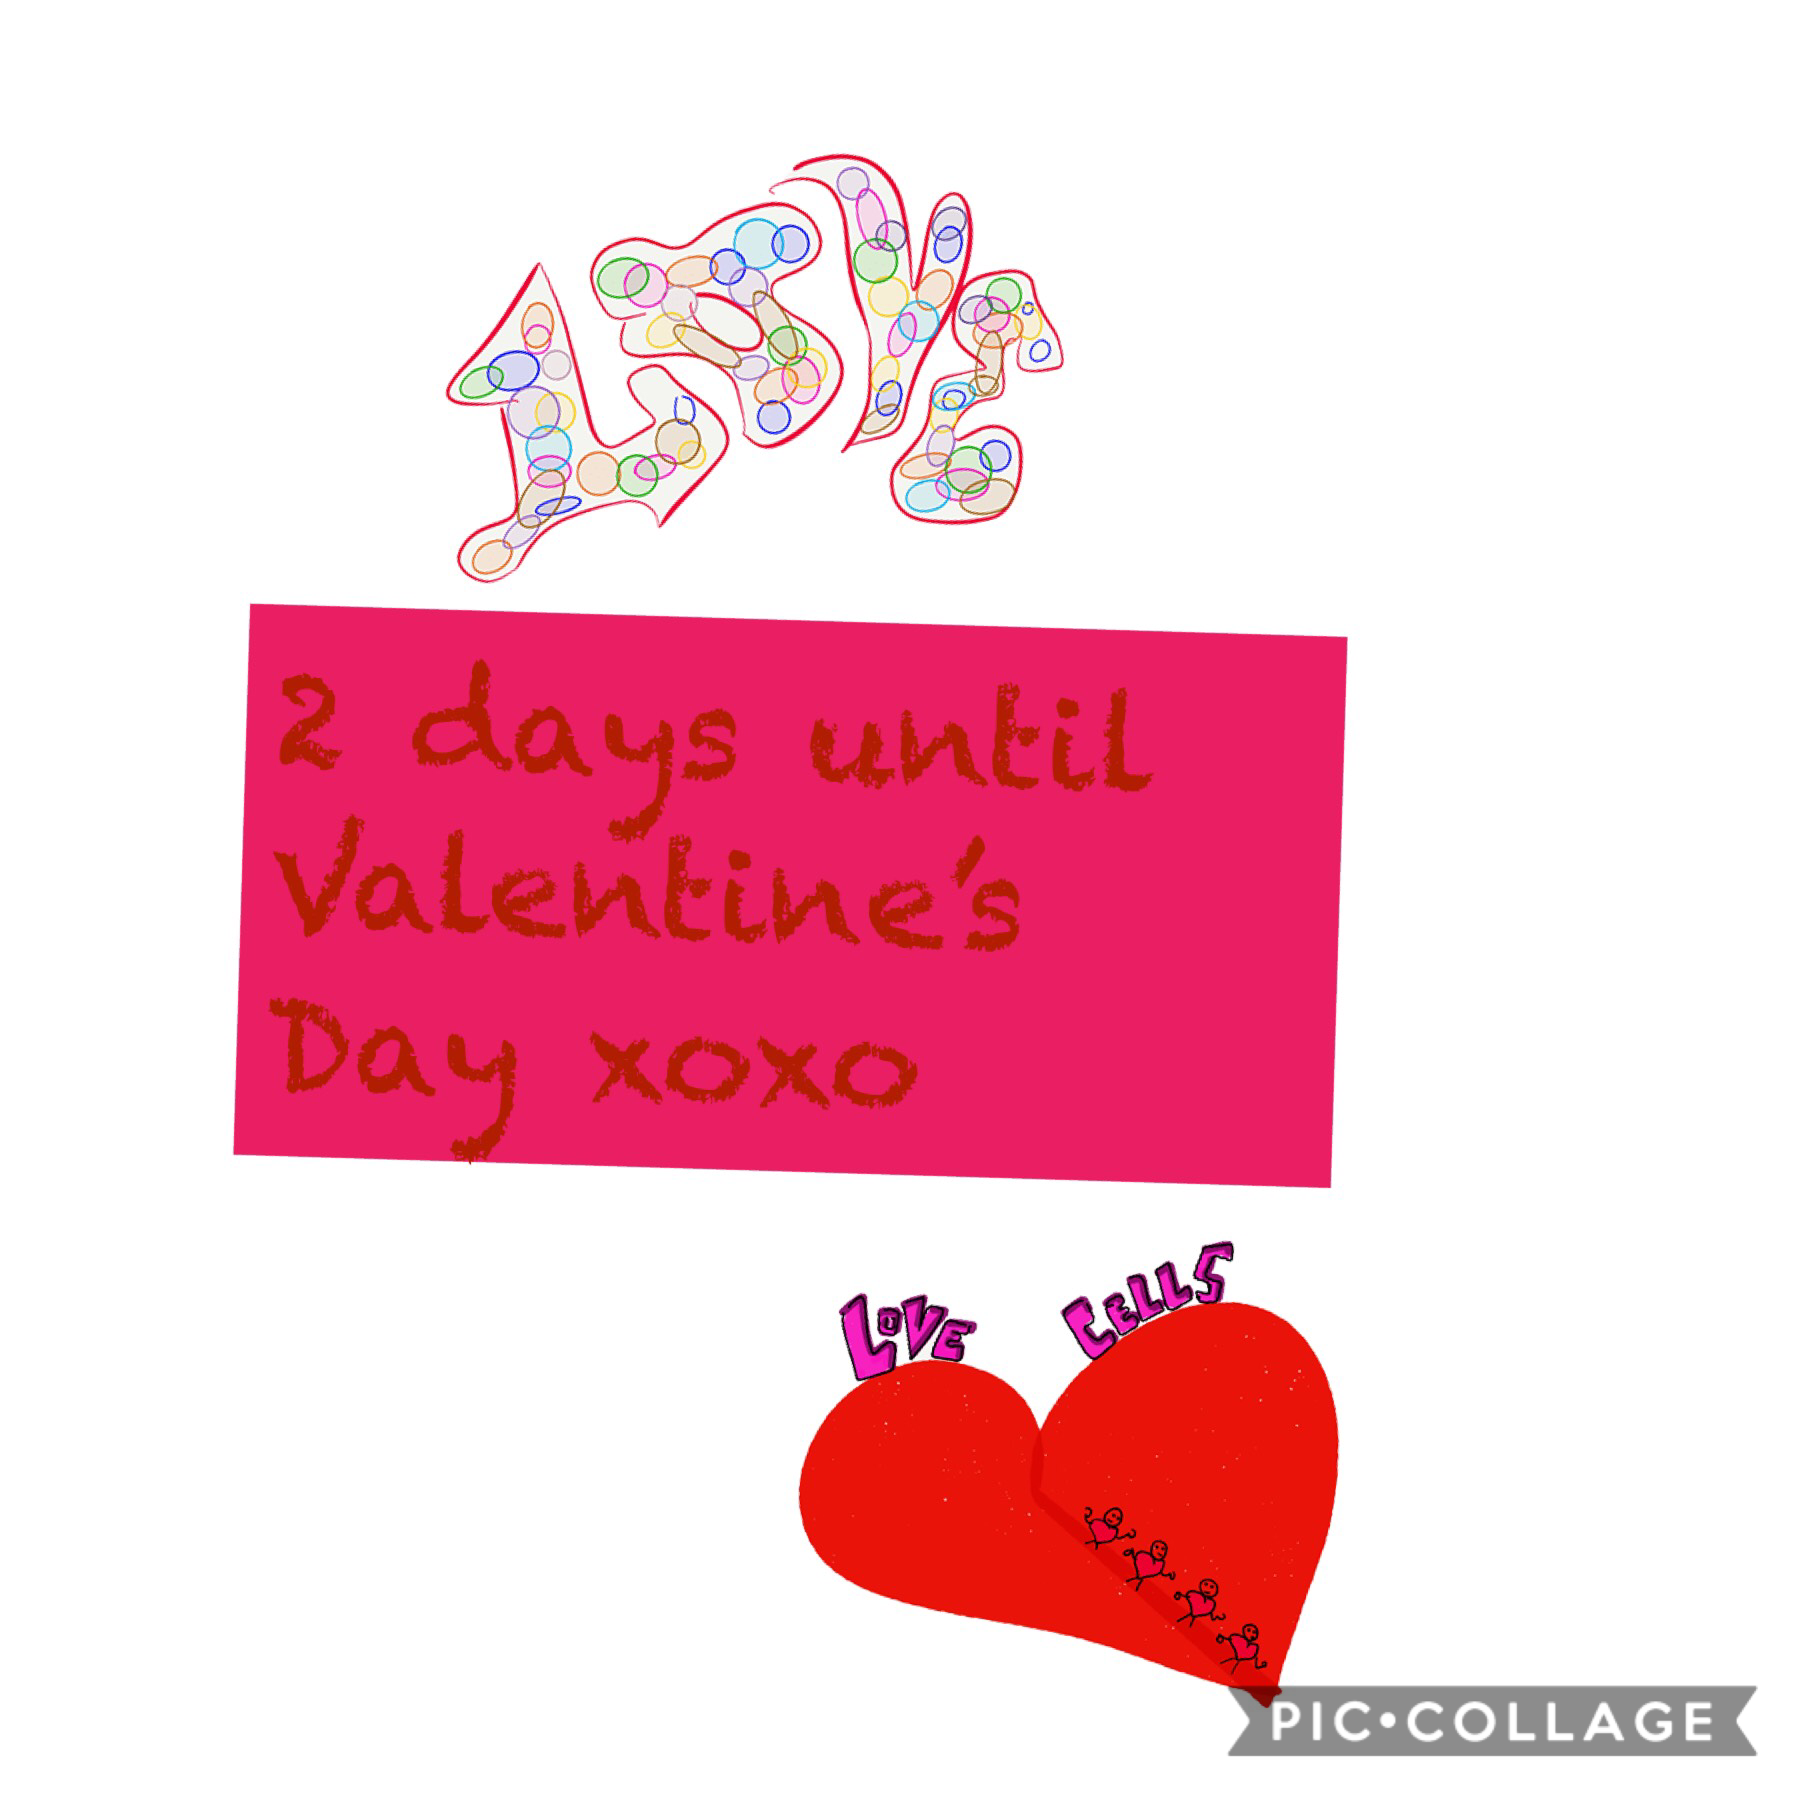 2 days until Valentine’s Day xoxo❤️❤️